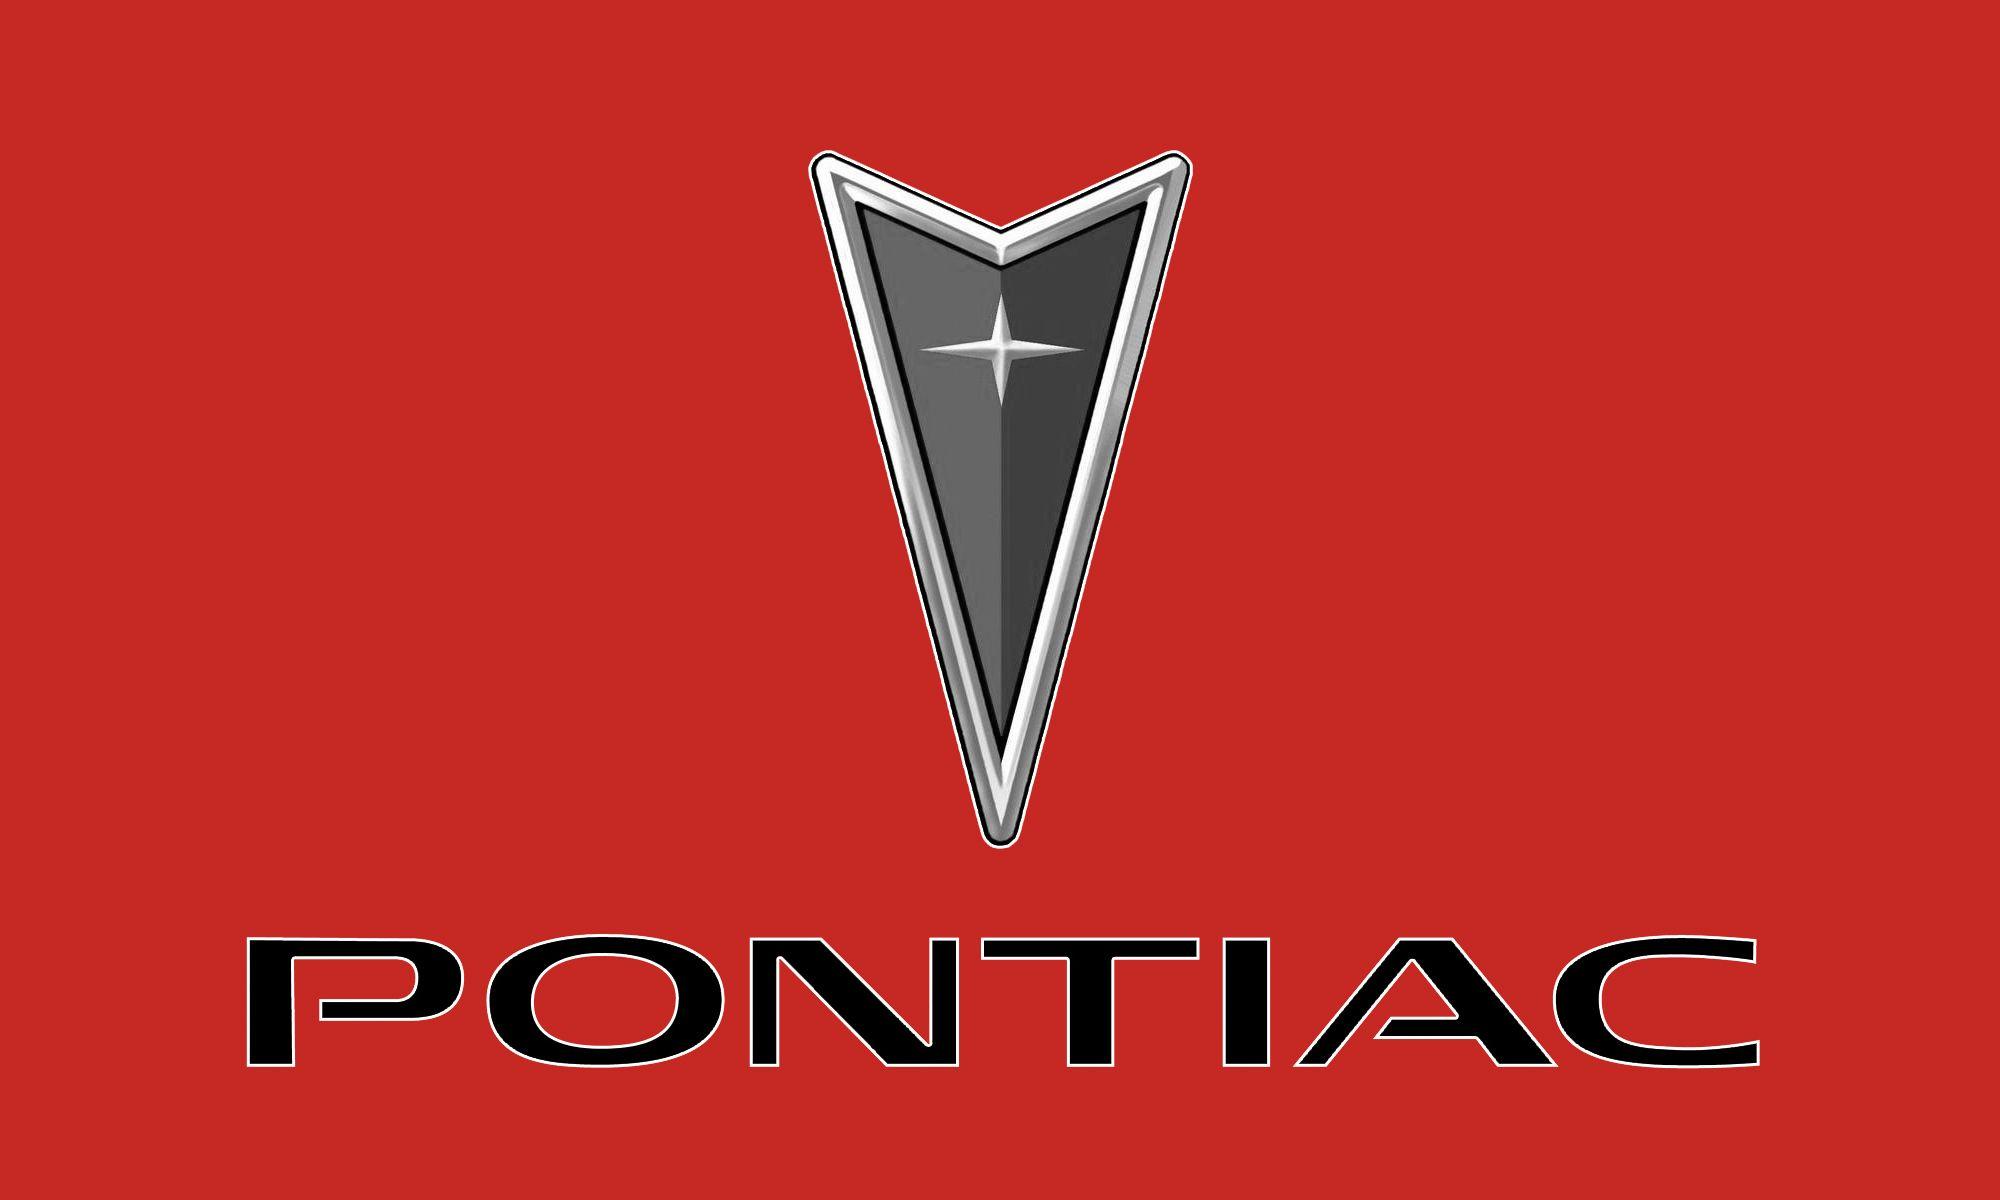 Upside Down Pontiac Logo - Pontiac Logo Meaning and History, latest models. World Cars Brands